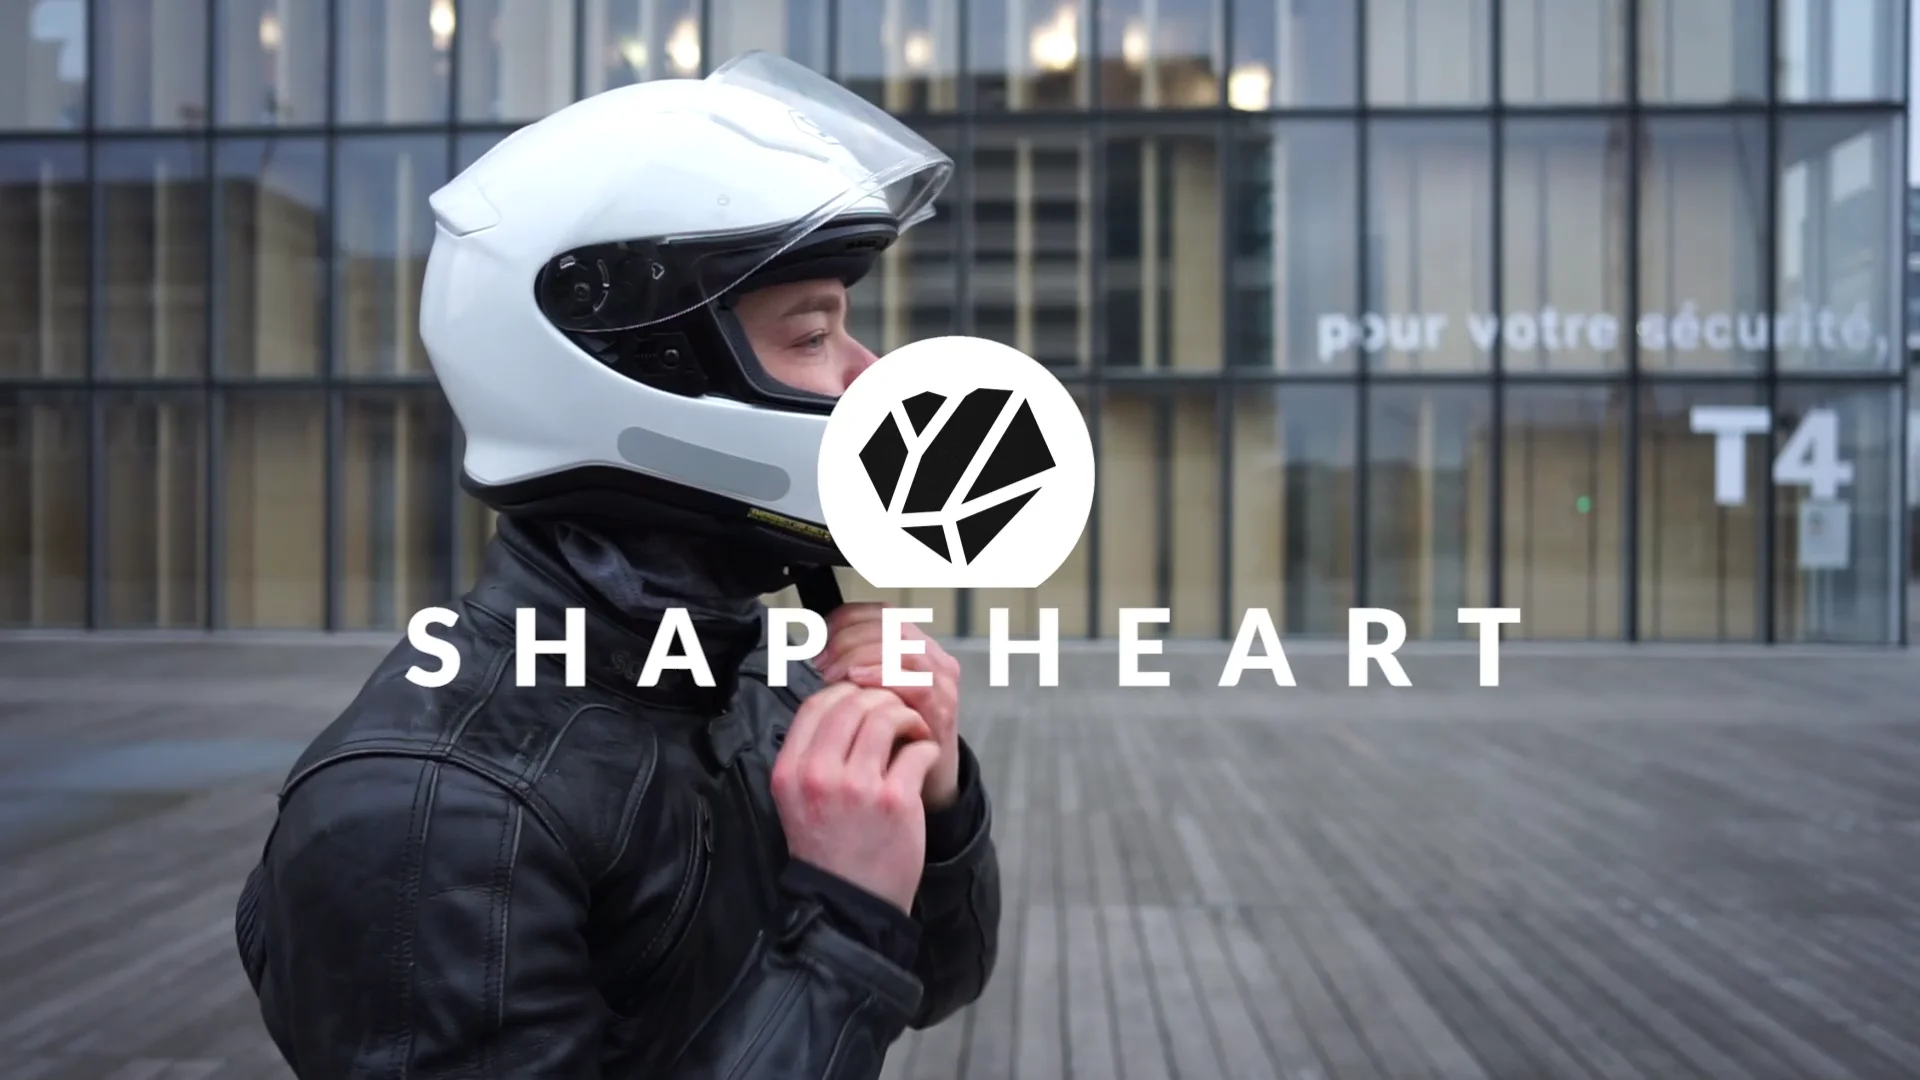 Shapeheart - Moto STEM (FR) on Vimeo